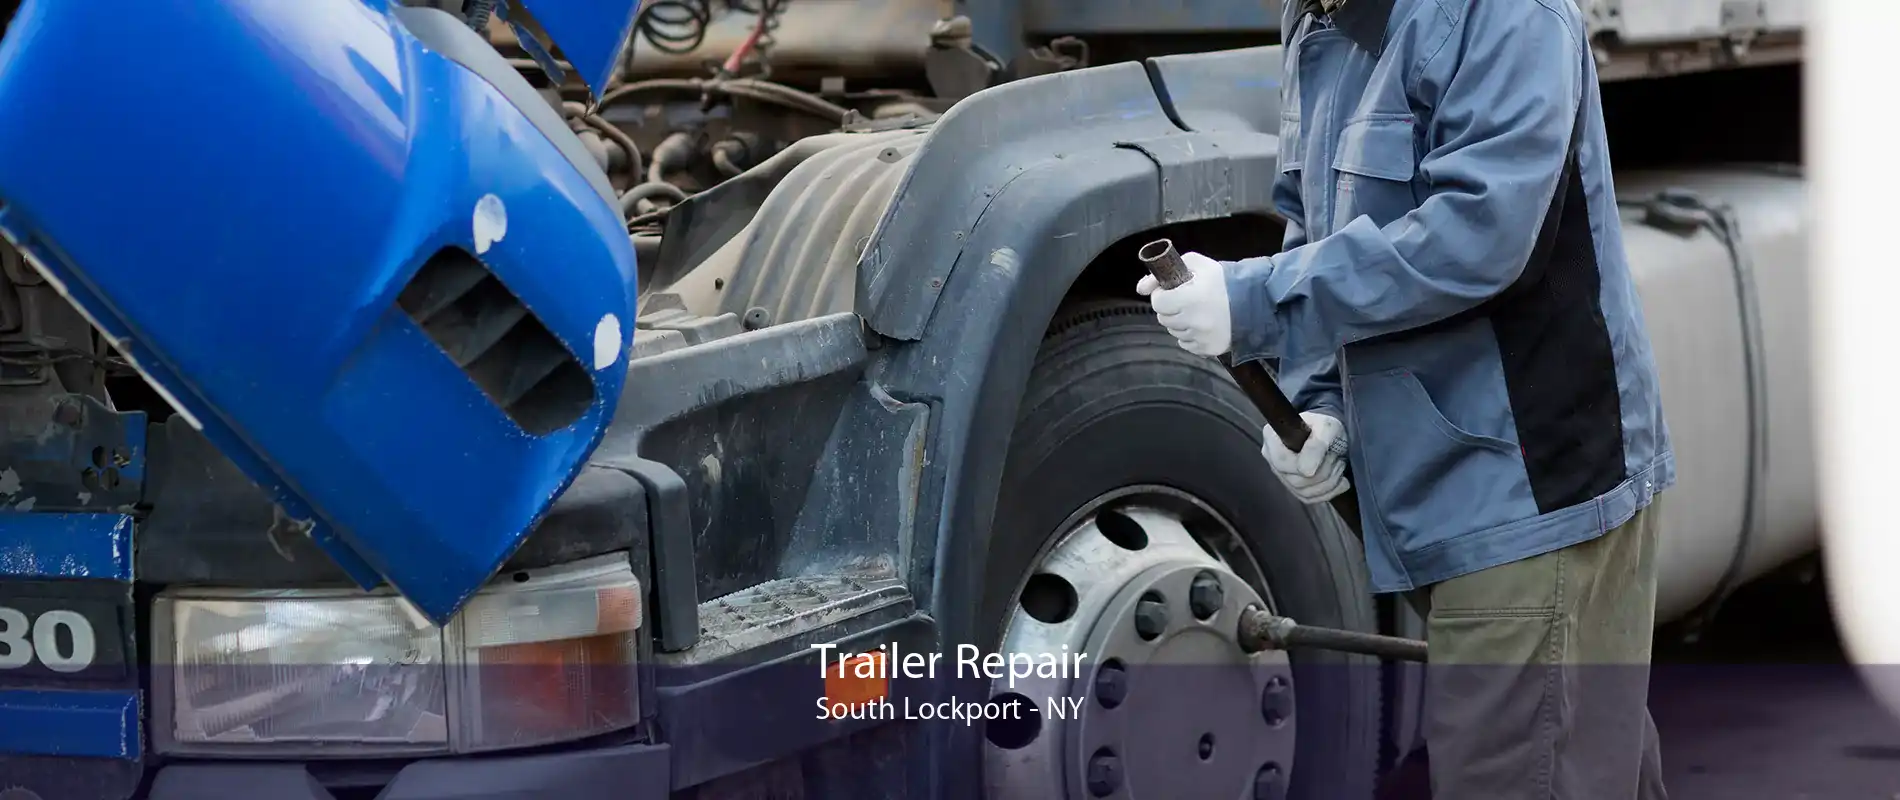 Trailer Repair South Lockport - NY